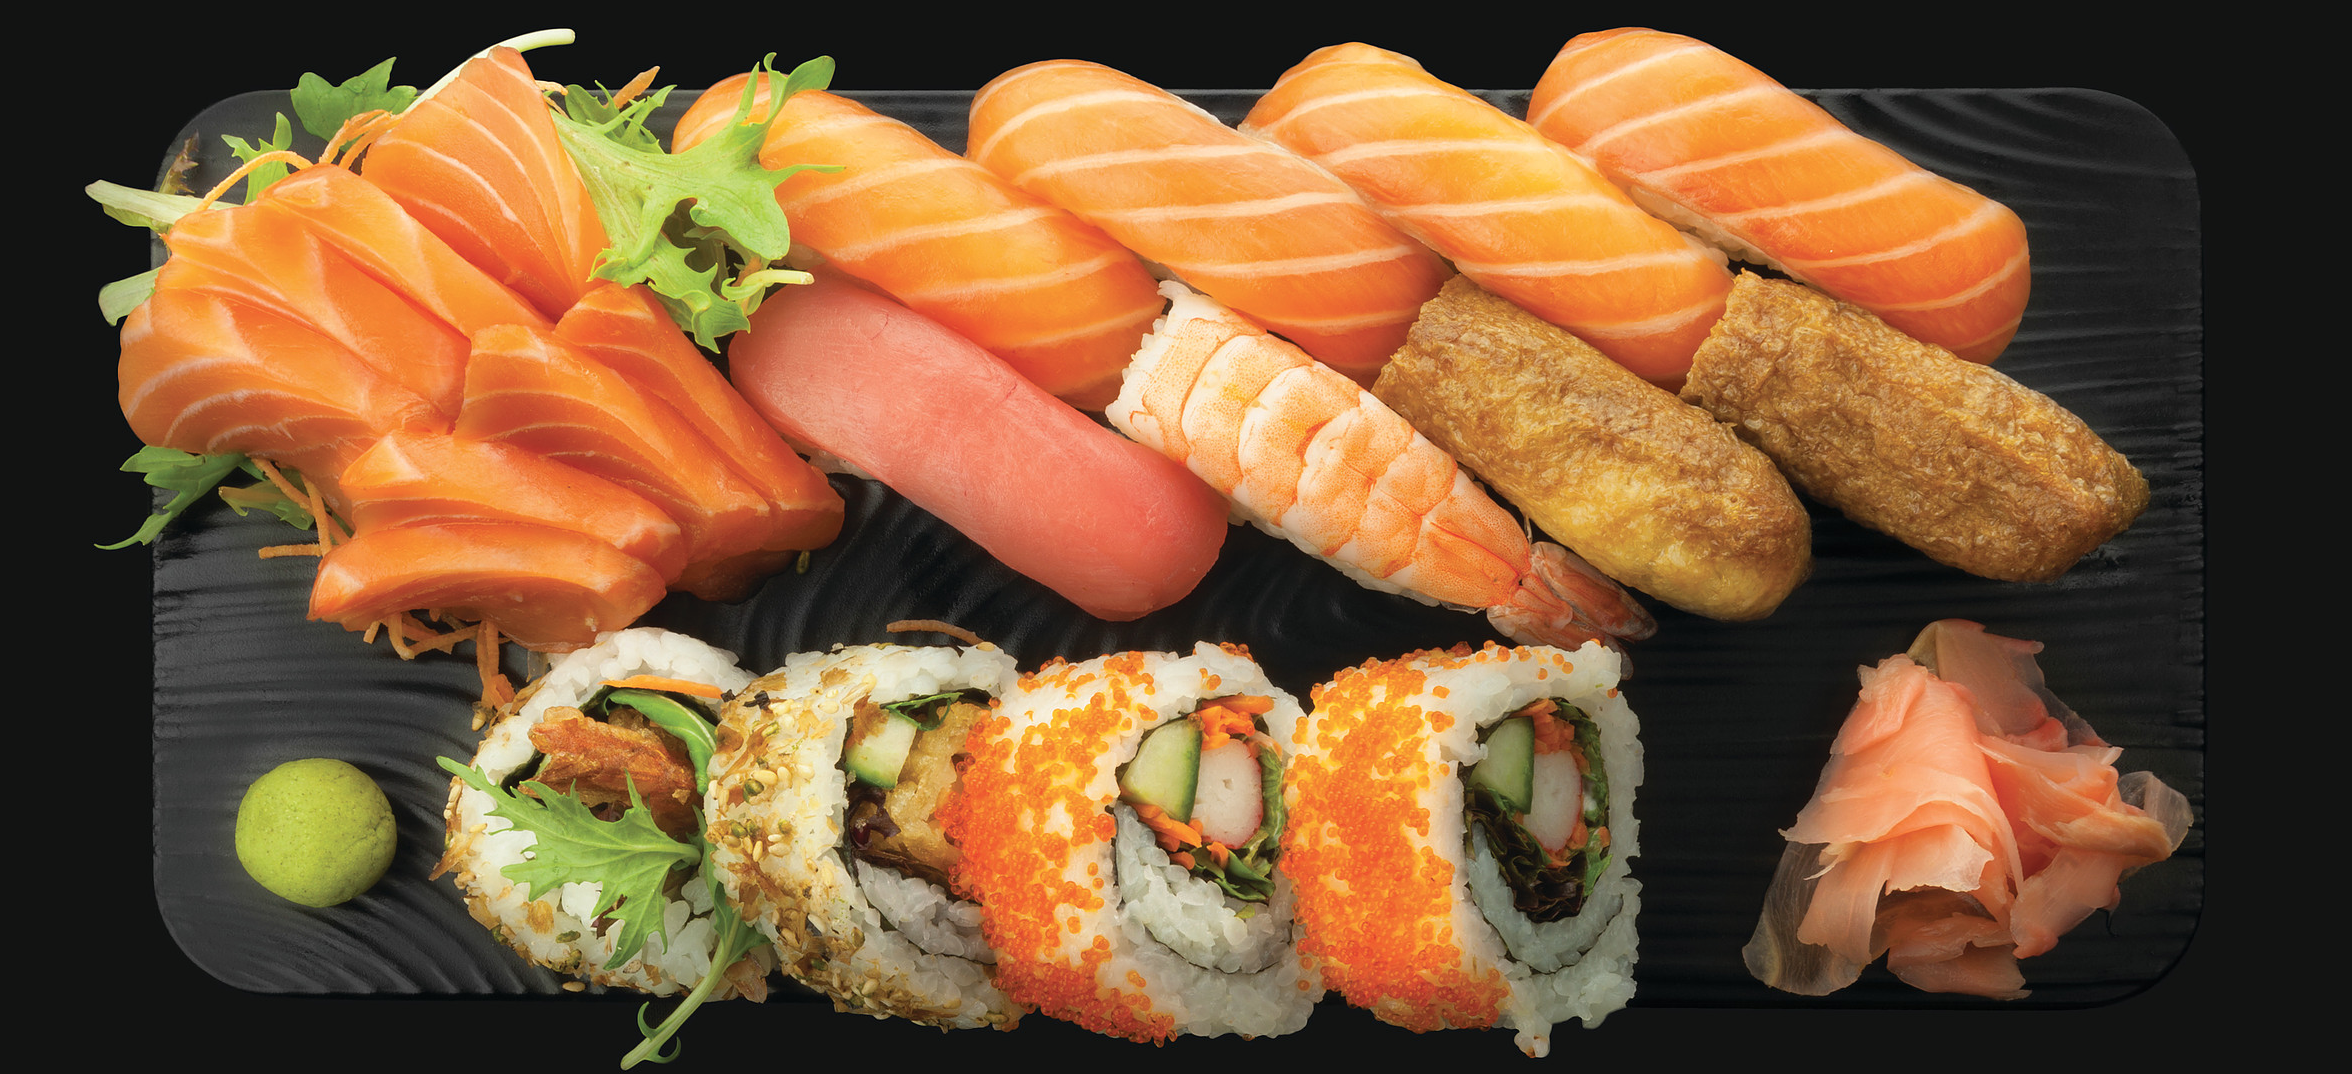 File:Okami variety sushi platter.JPG - Wikimedia Commons